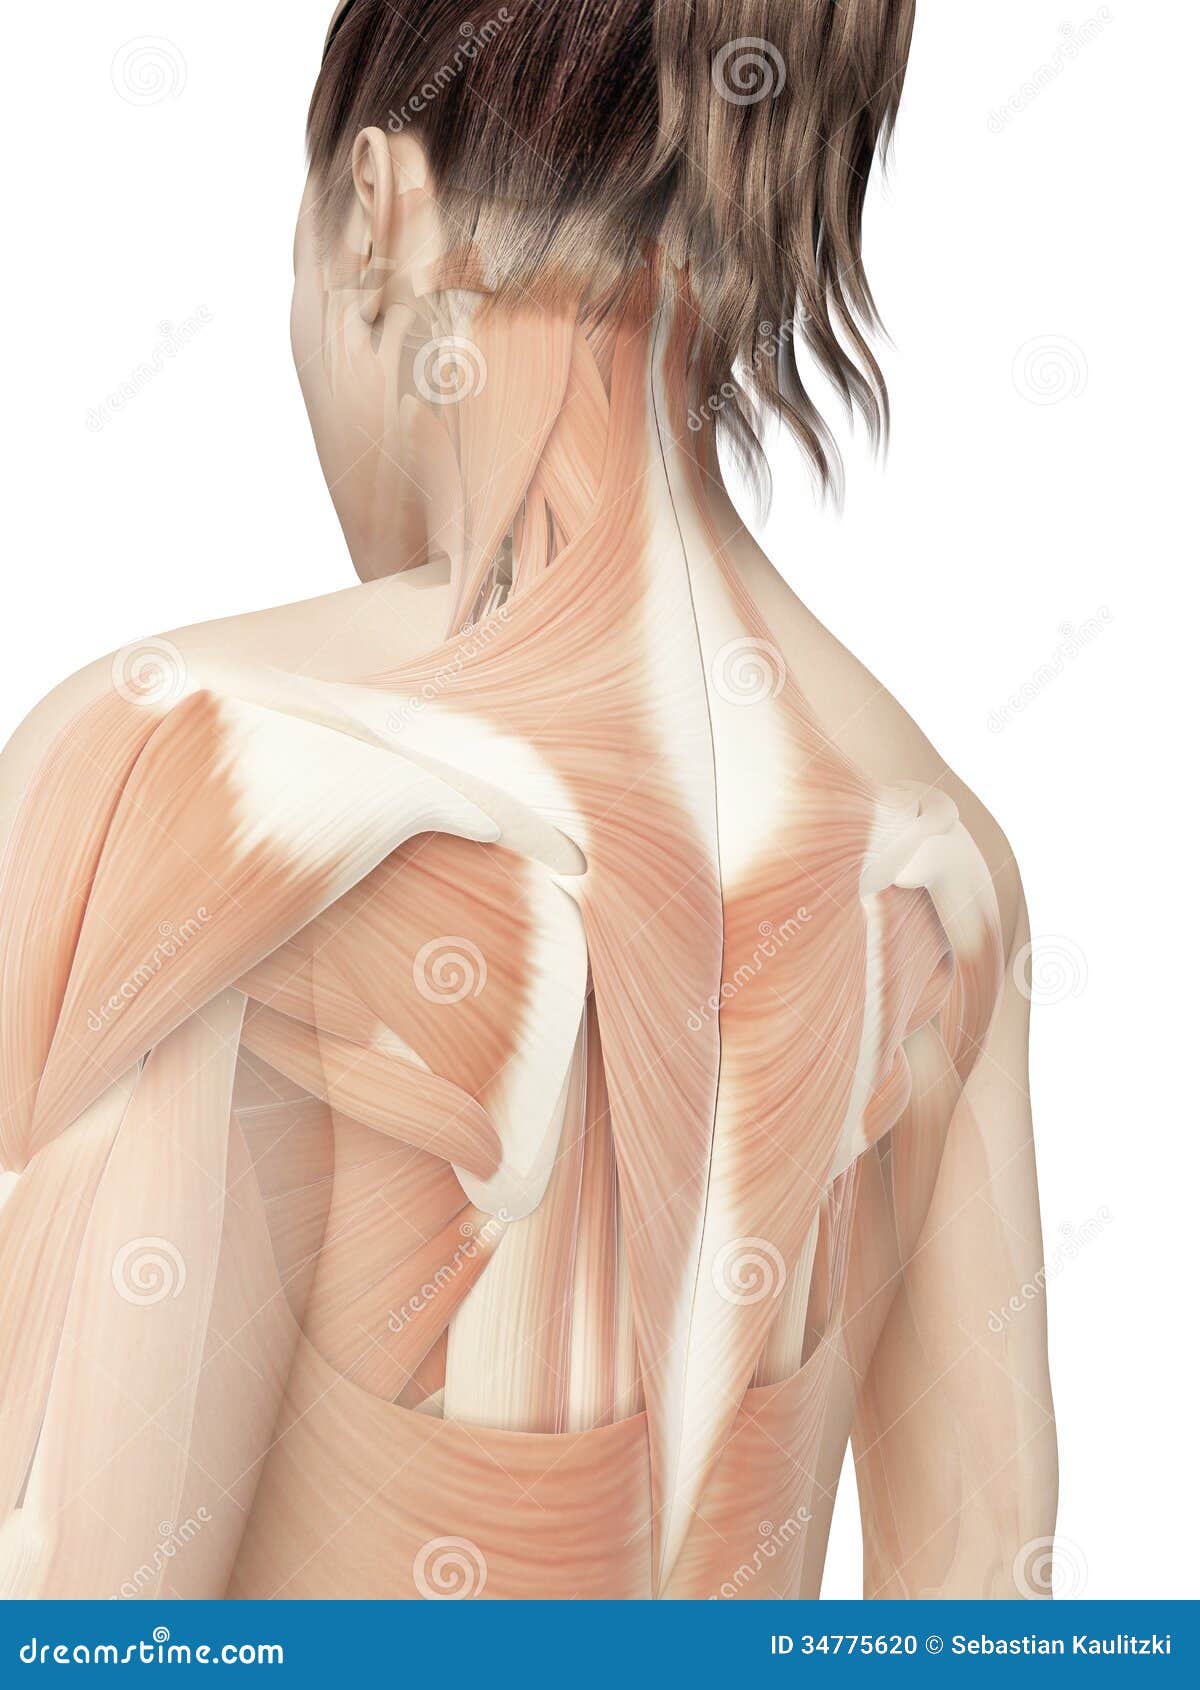 Female back muscles stock illustration. Illustration of woman